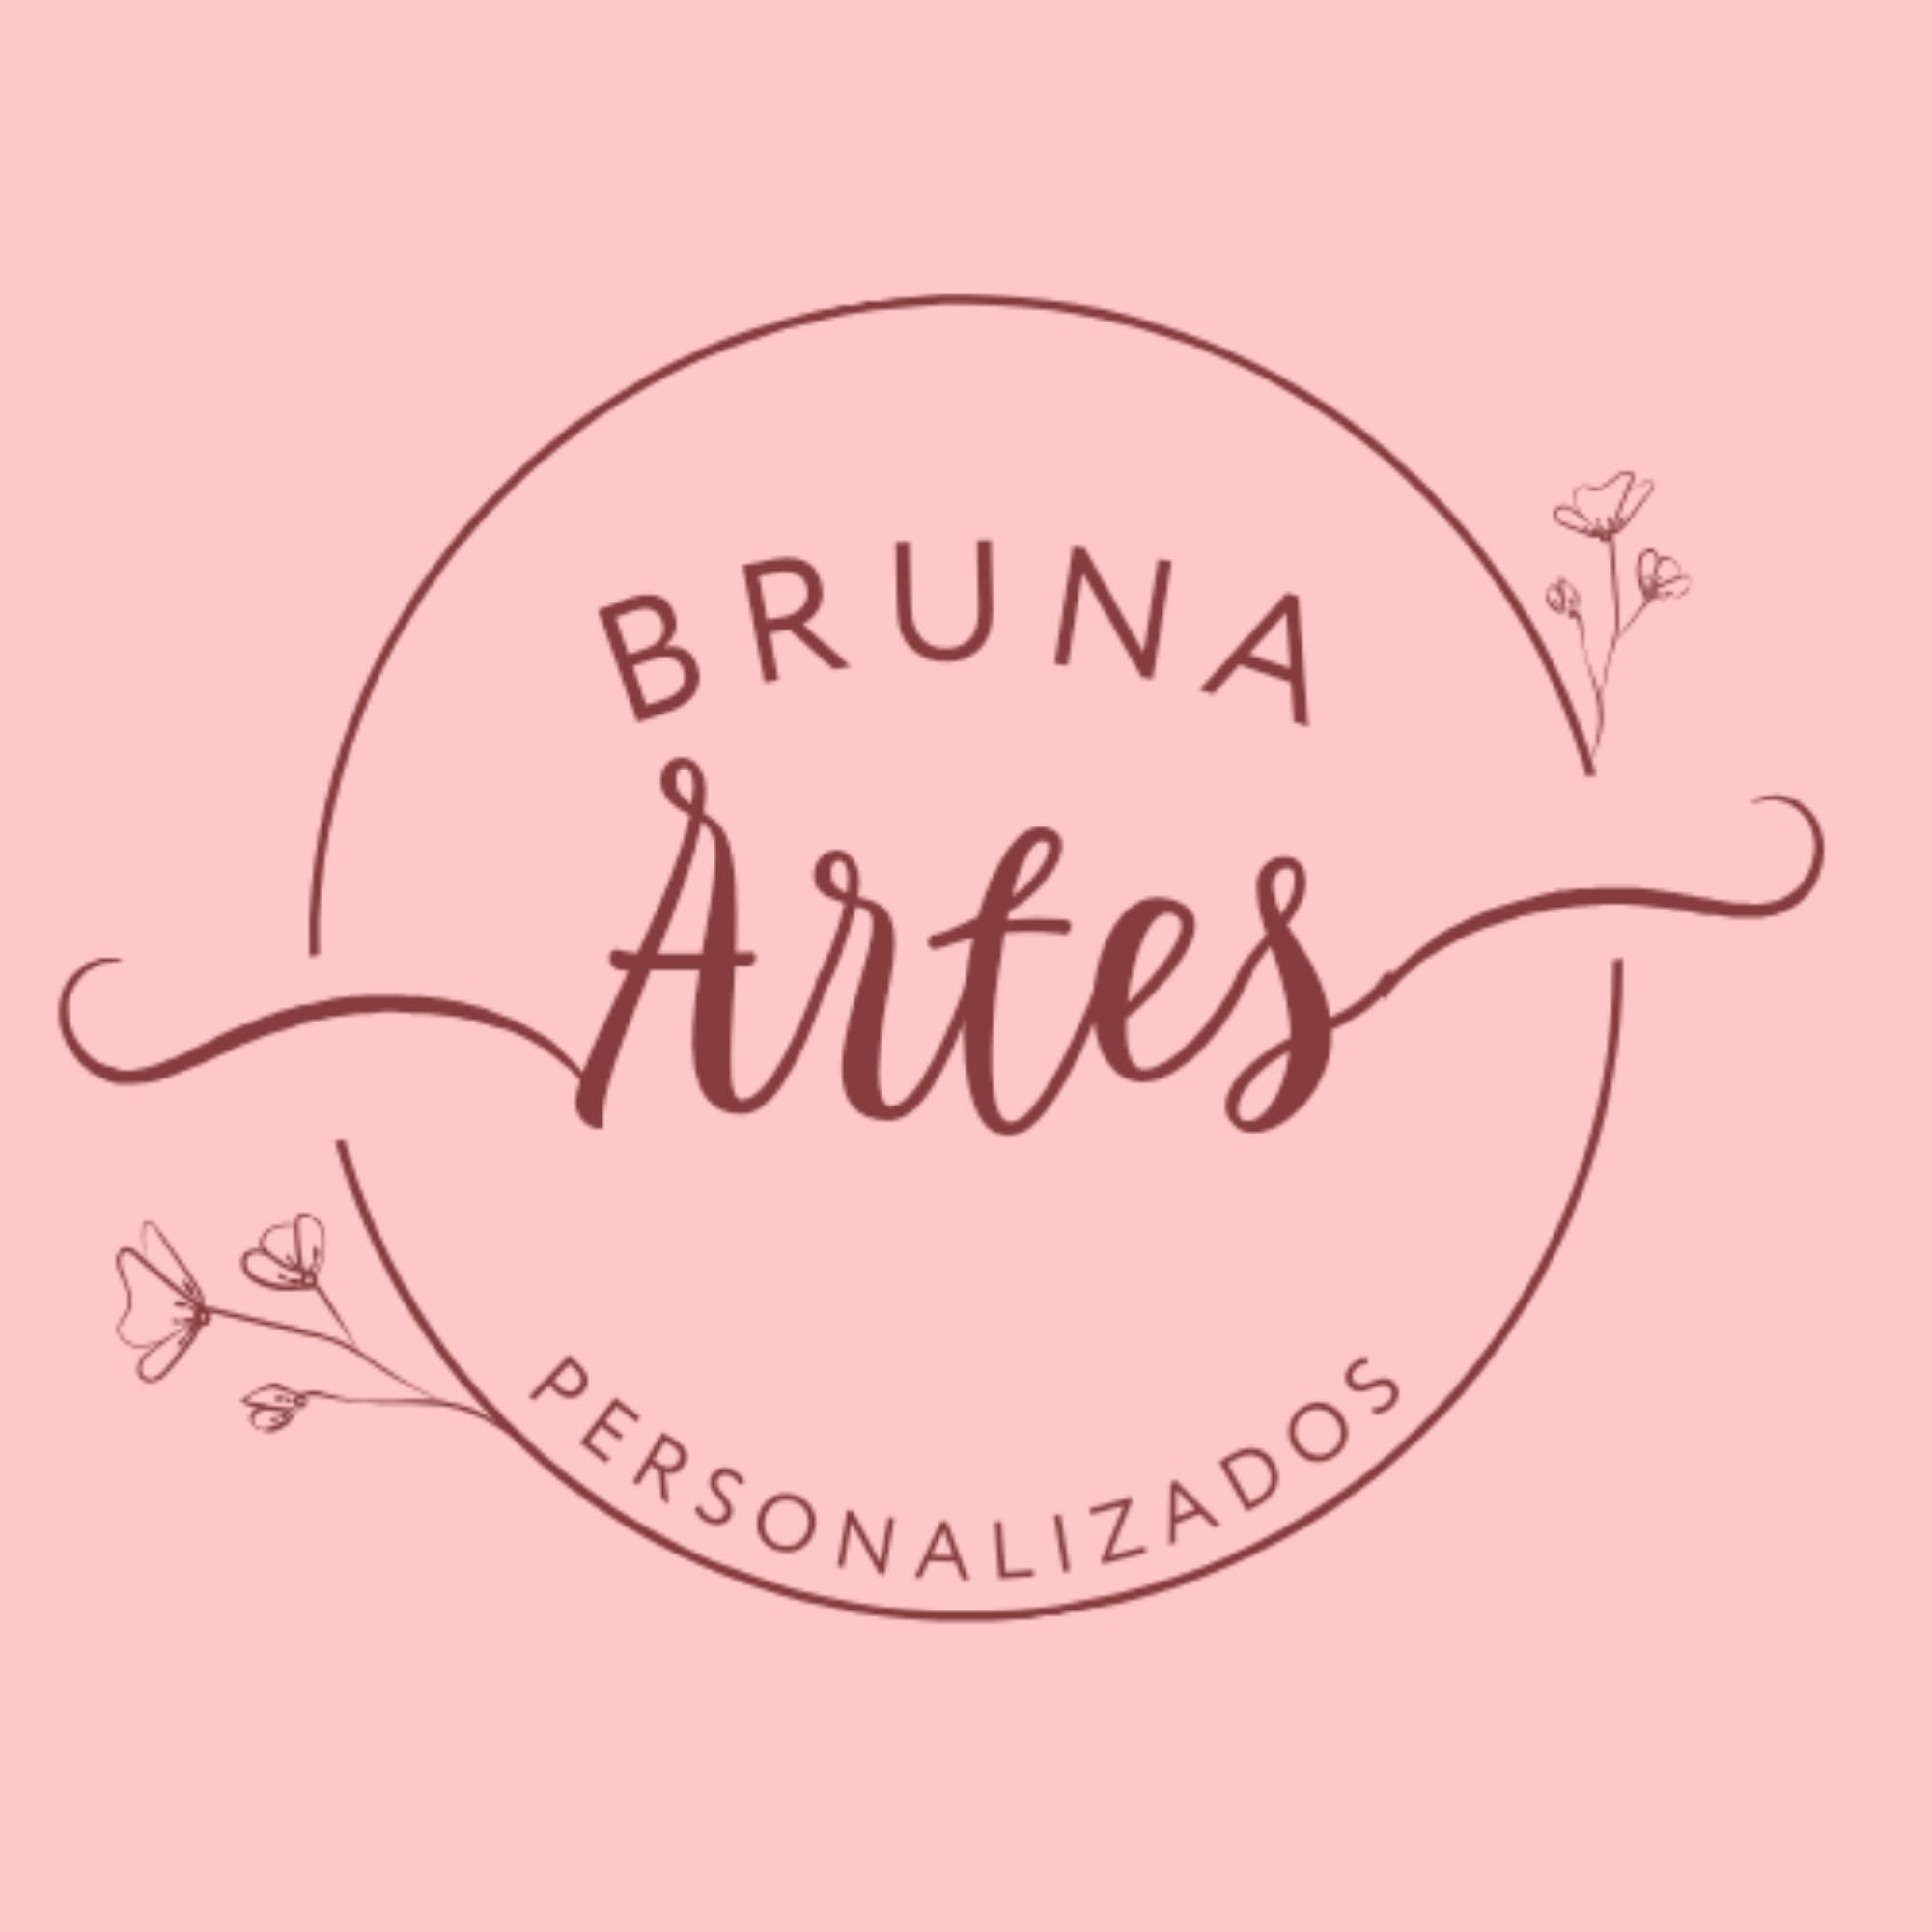 Personalizados da Bruna, Loja Online